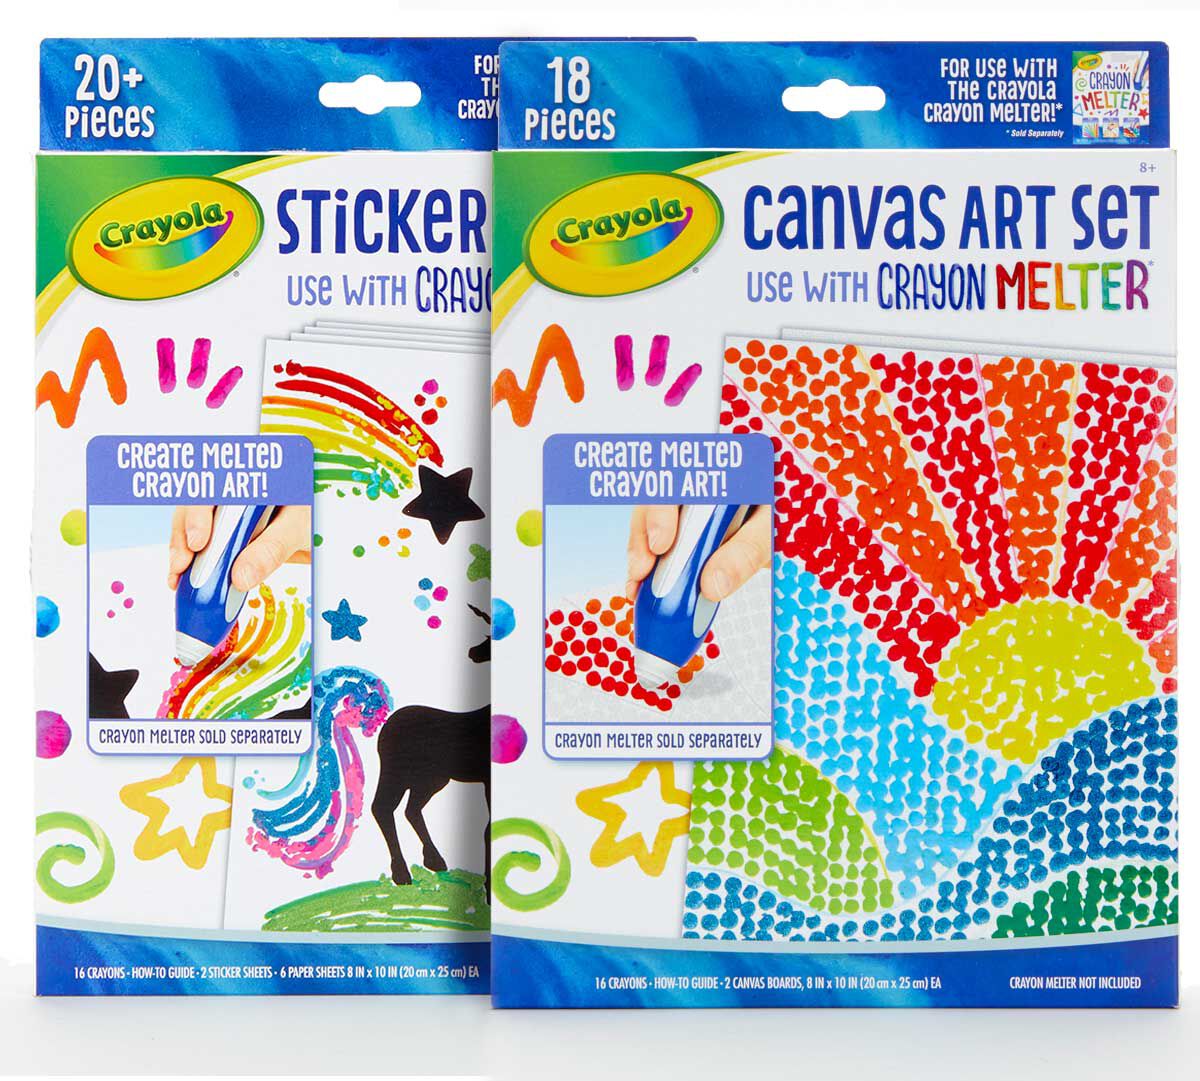 Crayon Melter 2-in-1 Art Set